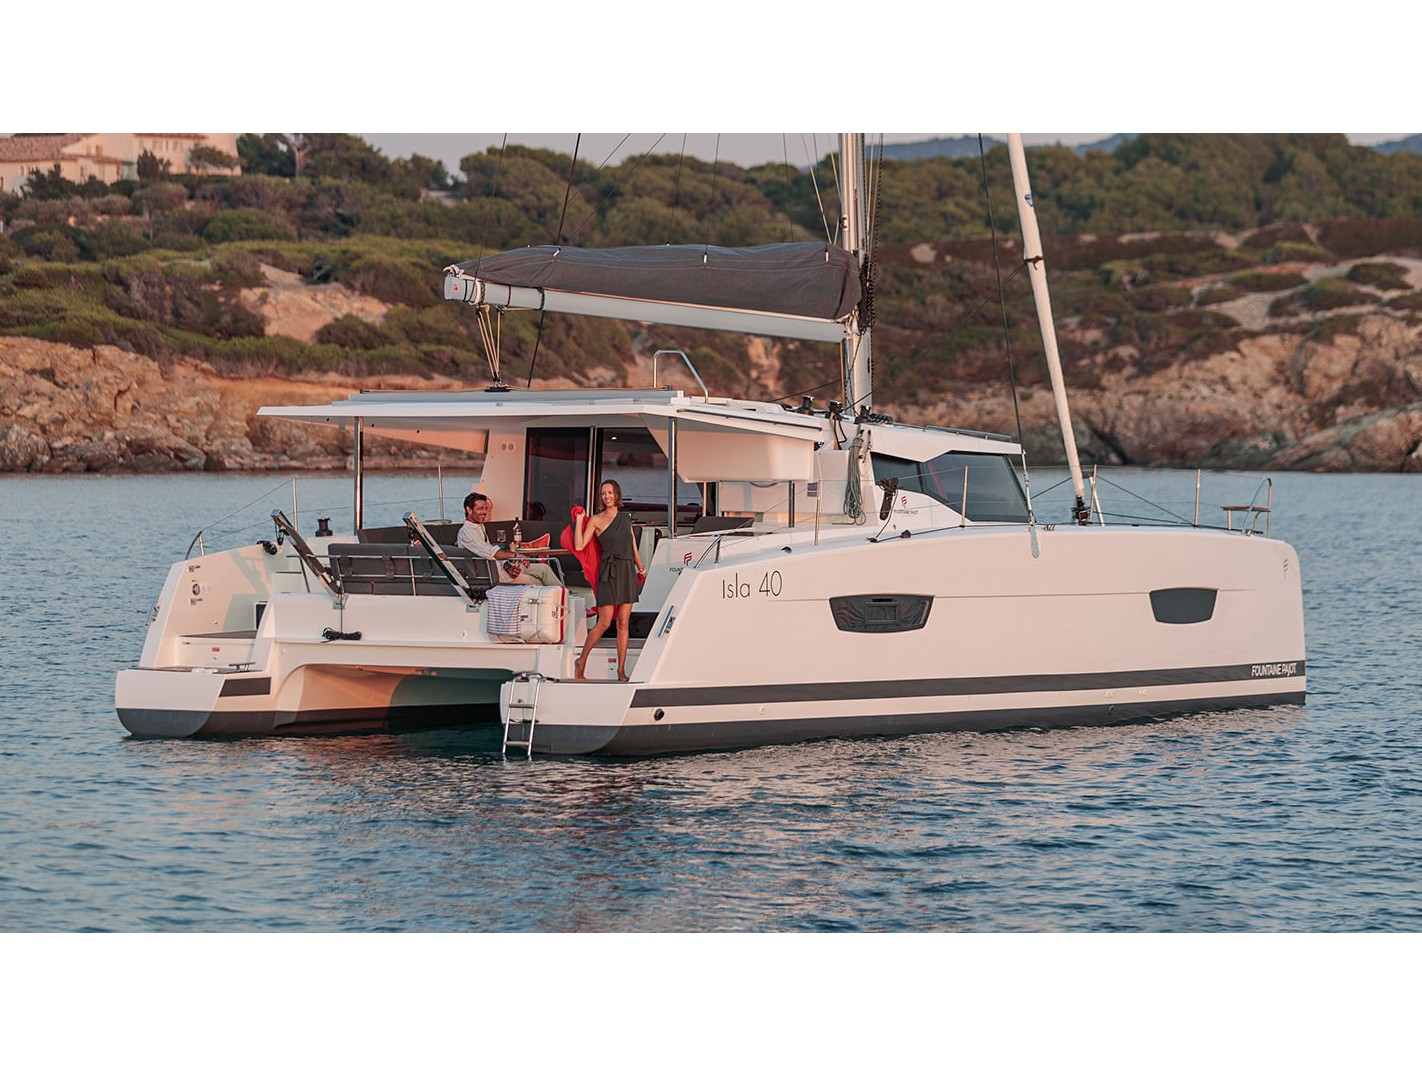 Isla 40 - Yacht Charter Balearics & Boat hire in Spain Balearic Islands Mallorca Palma De Mallorca Can Pastilla Club Maritimo San Antonio De La Playa 1